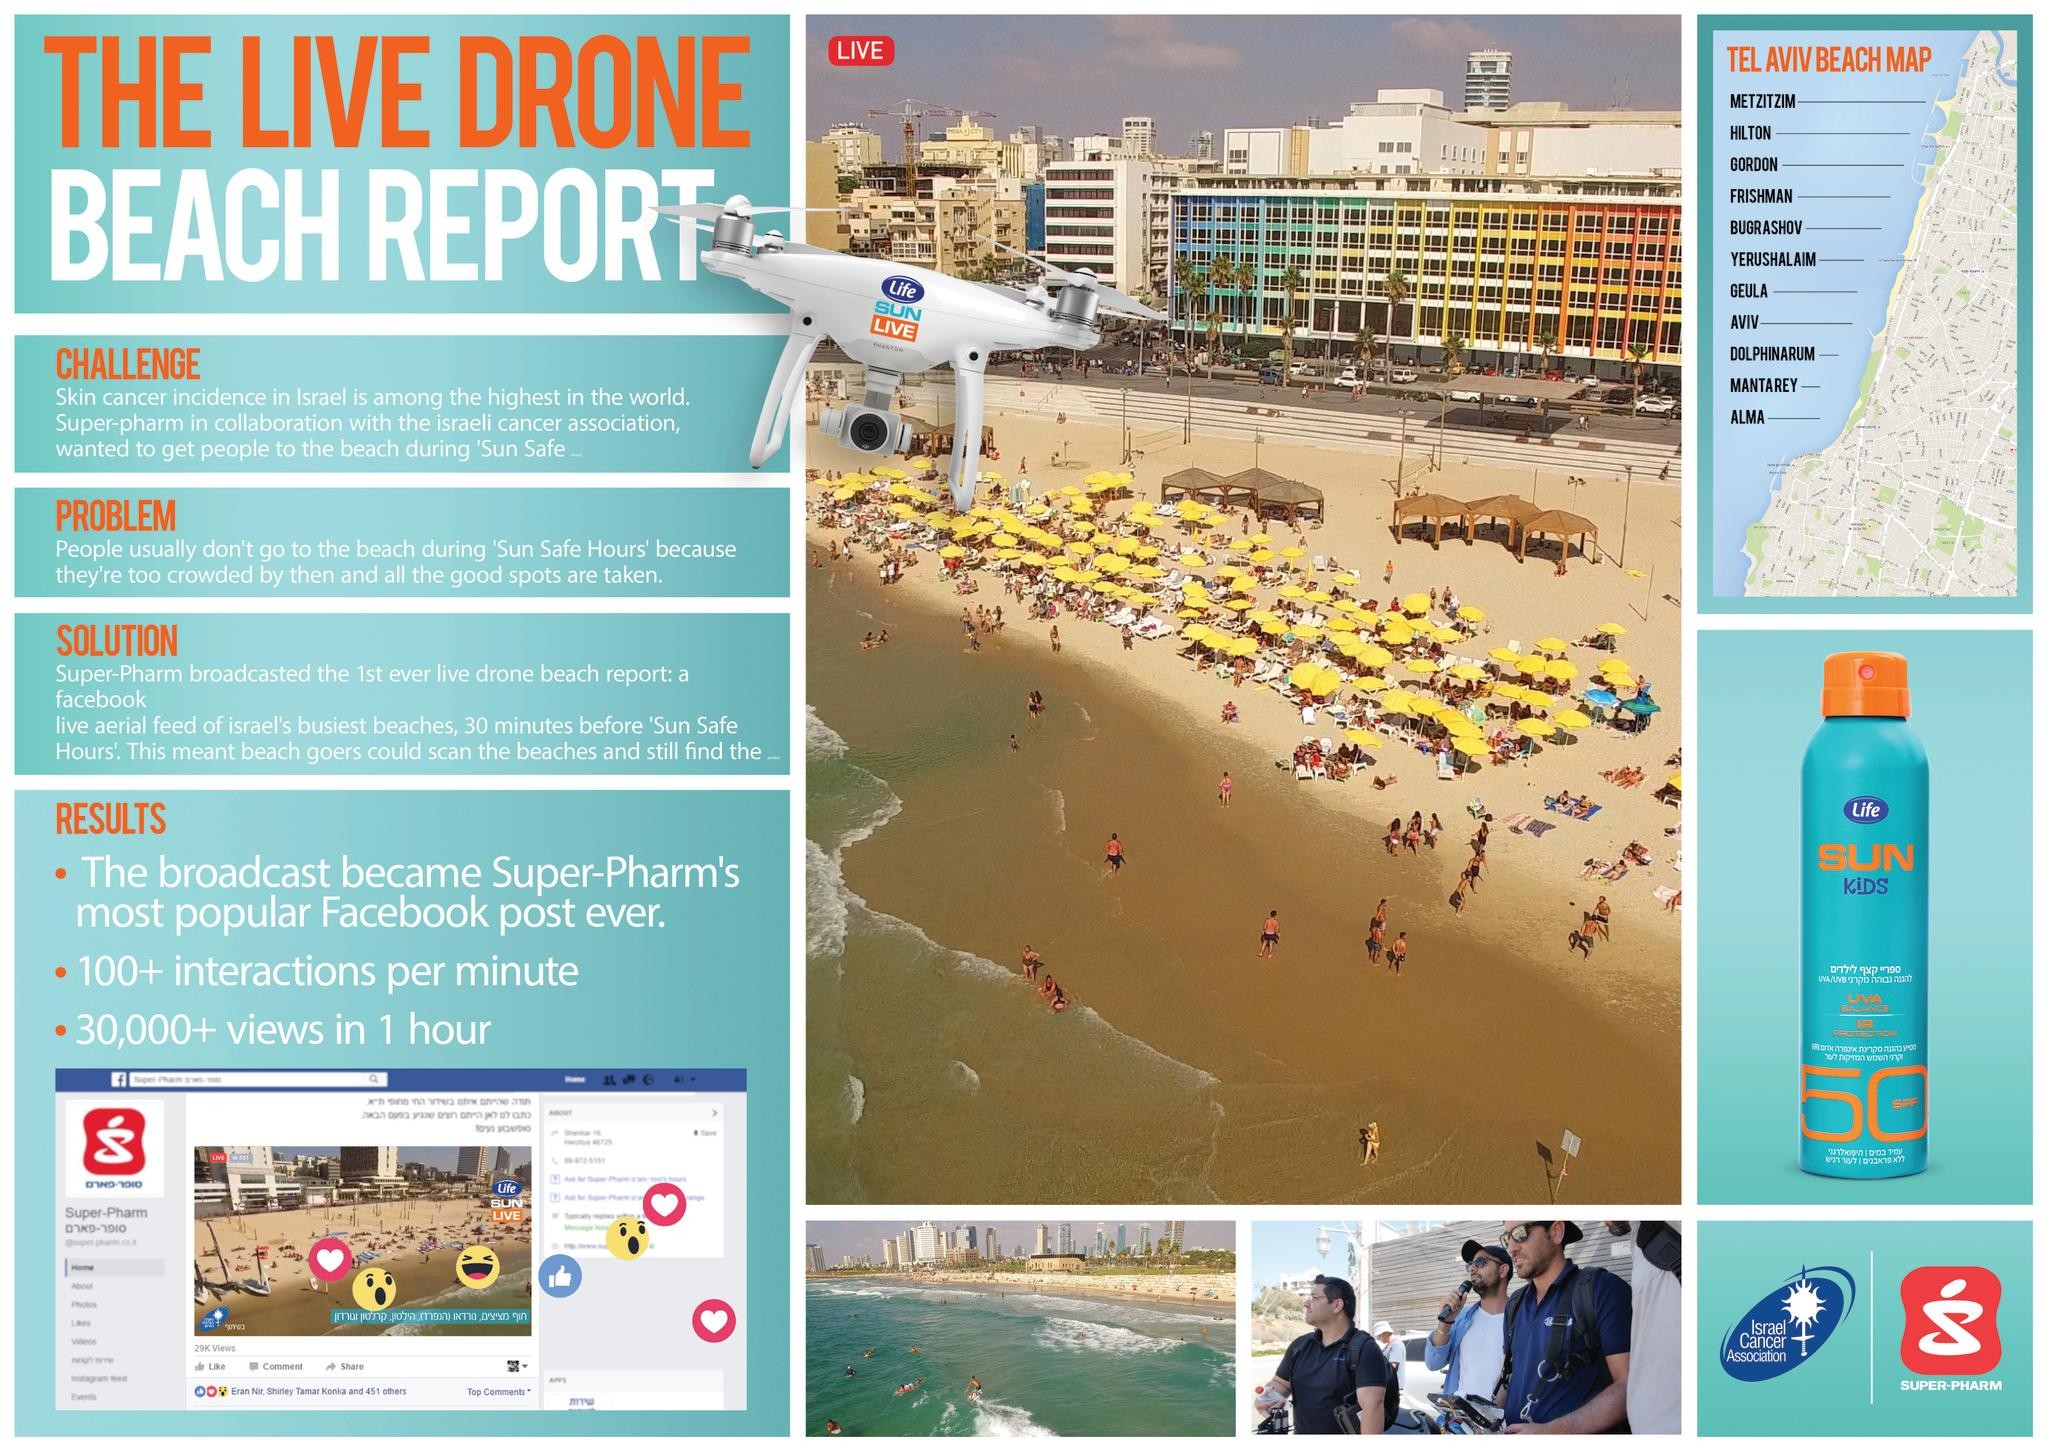 THE LIVE DRONE BEACH REPORT